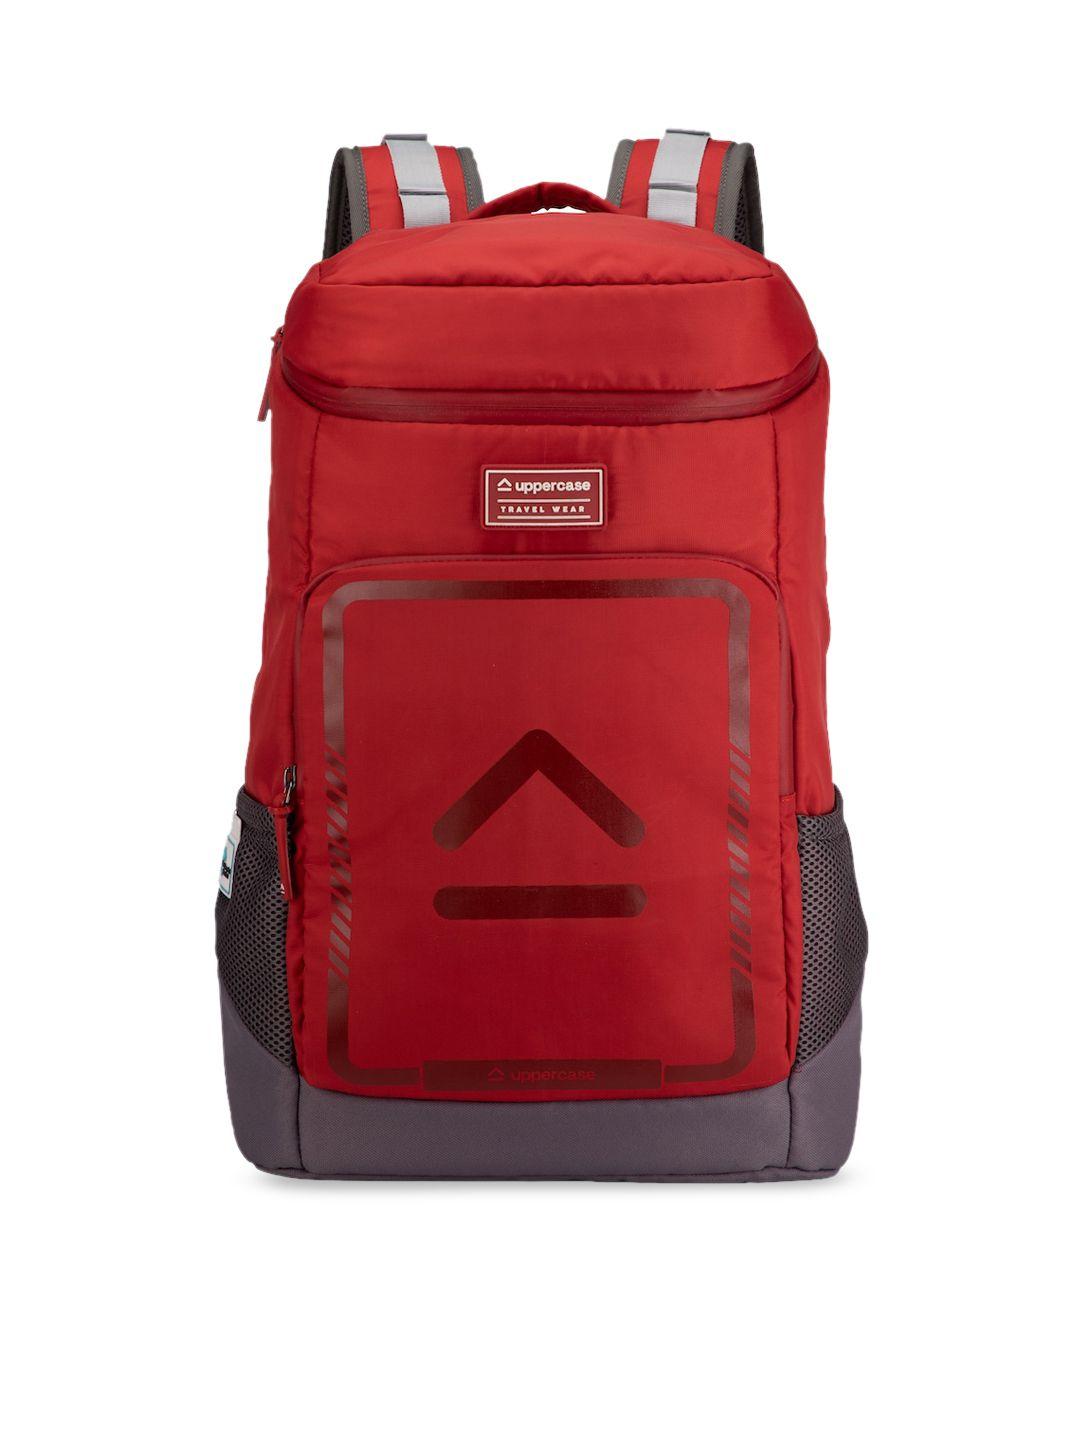 uppercase unisex red & grey sustainable backpack